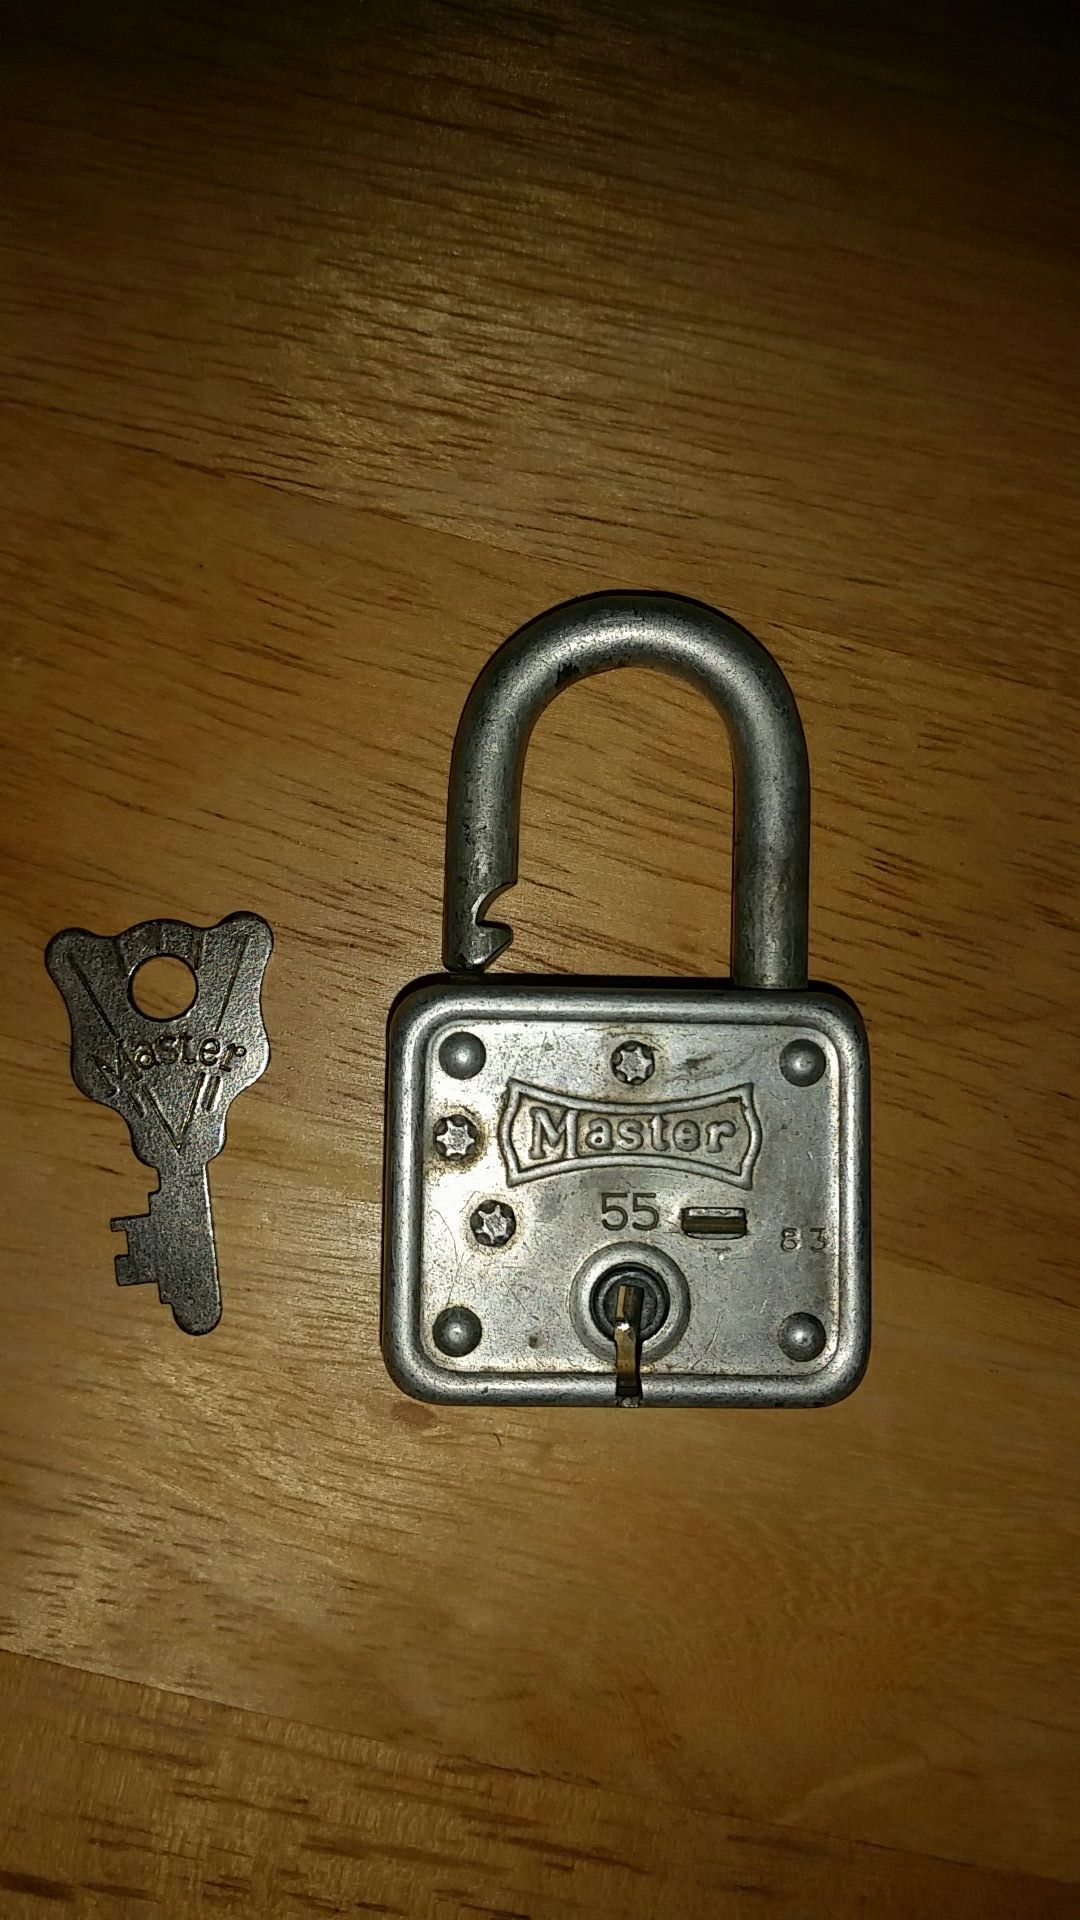 Vintage working master lock